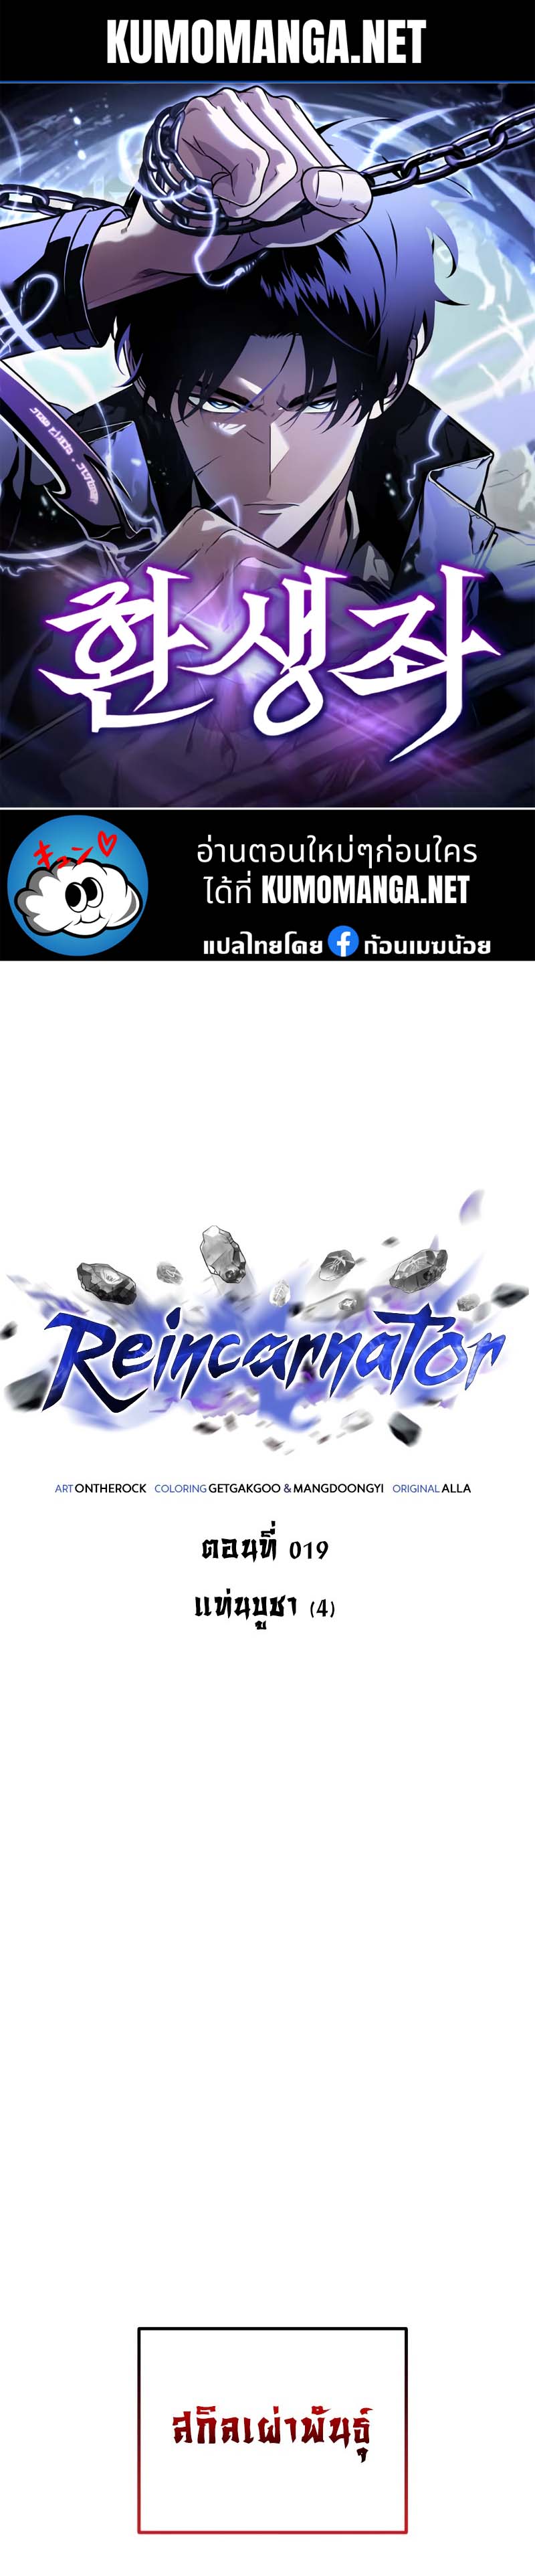 Reincarnator 19 (1)